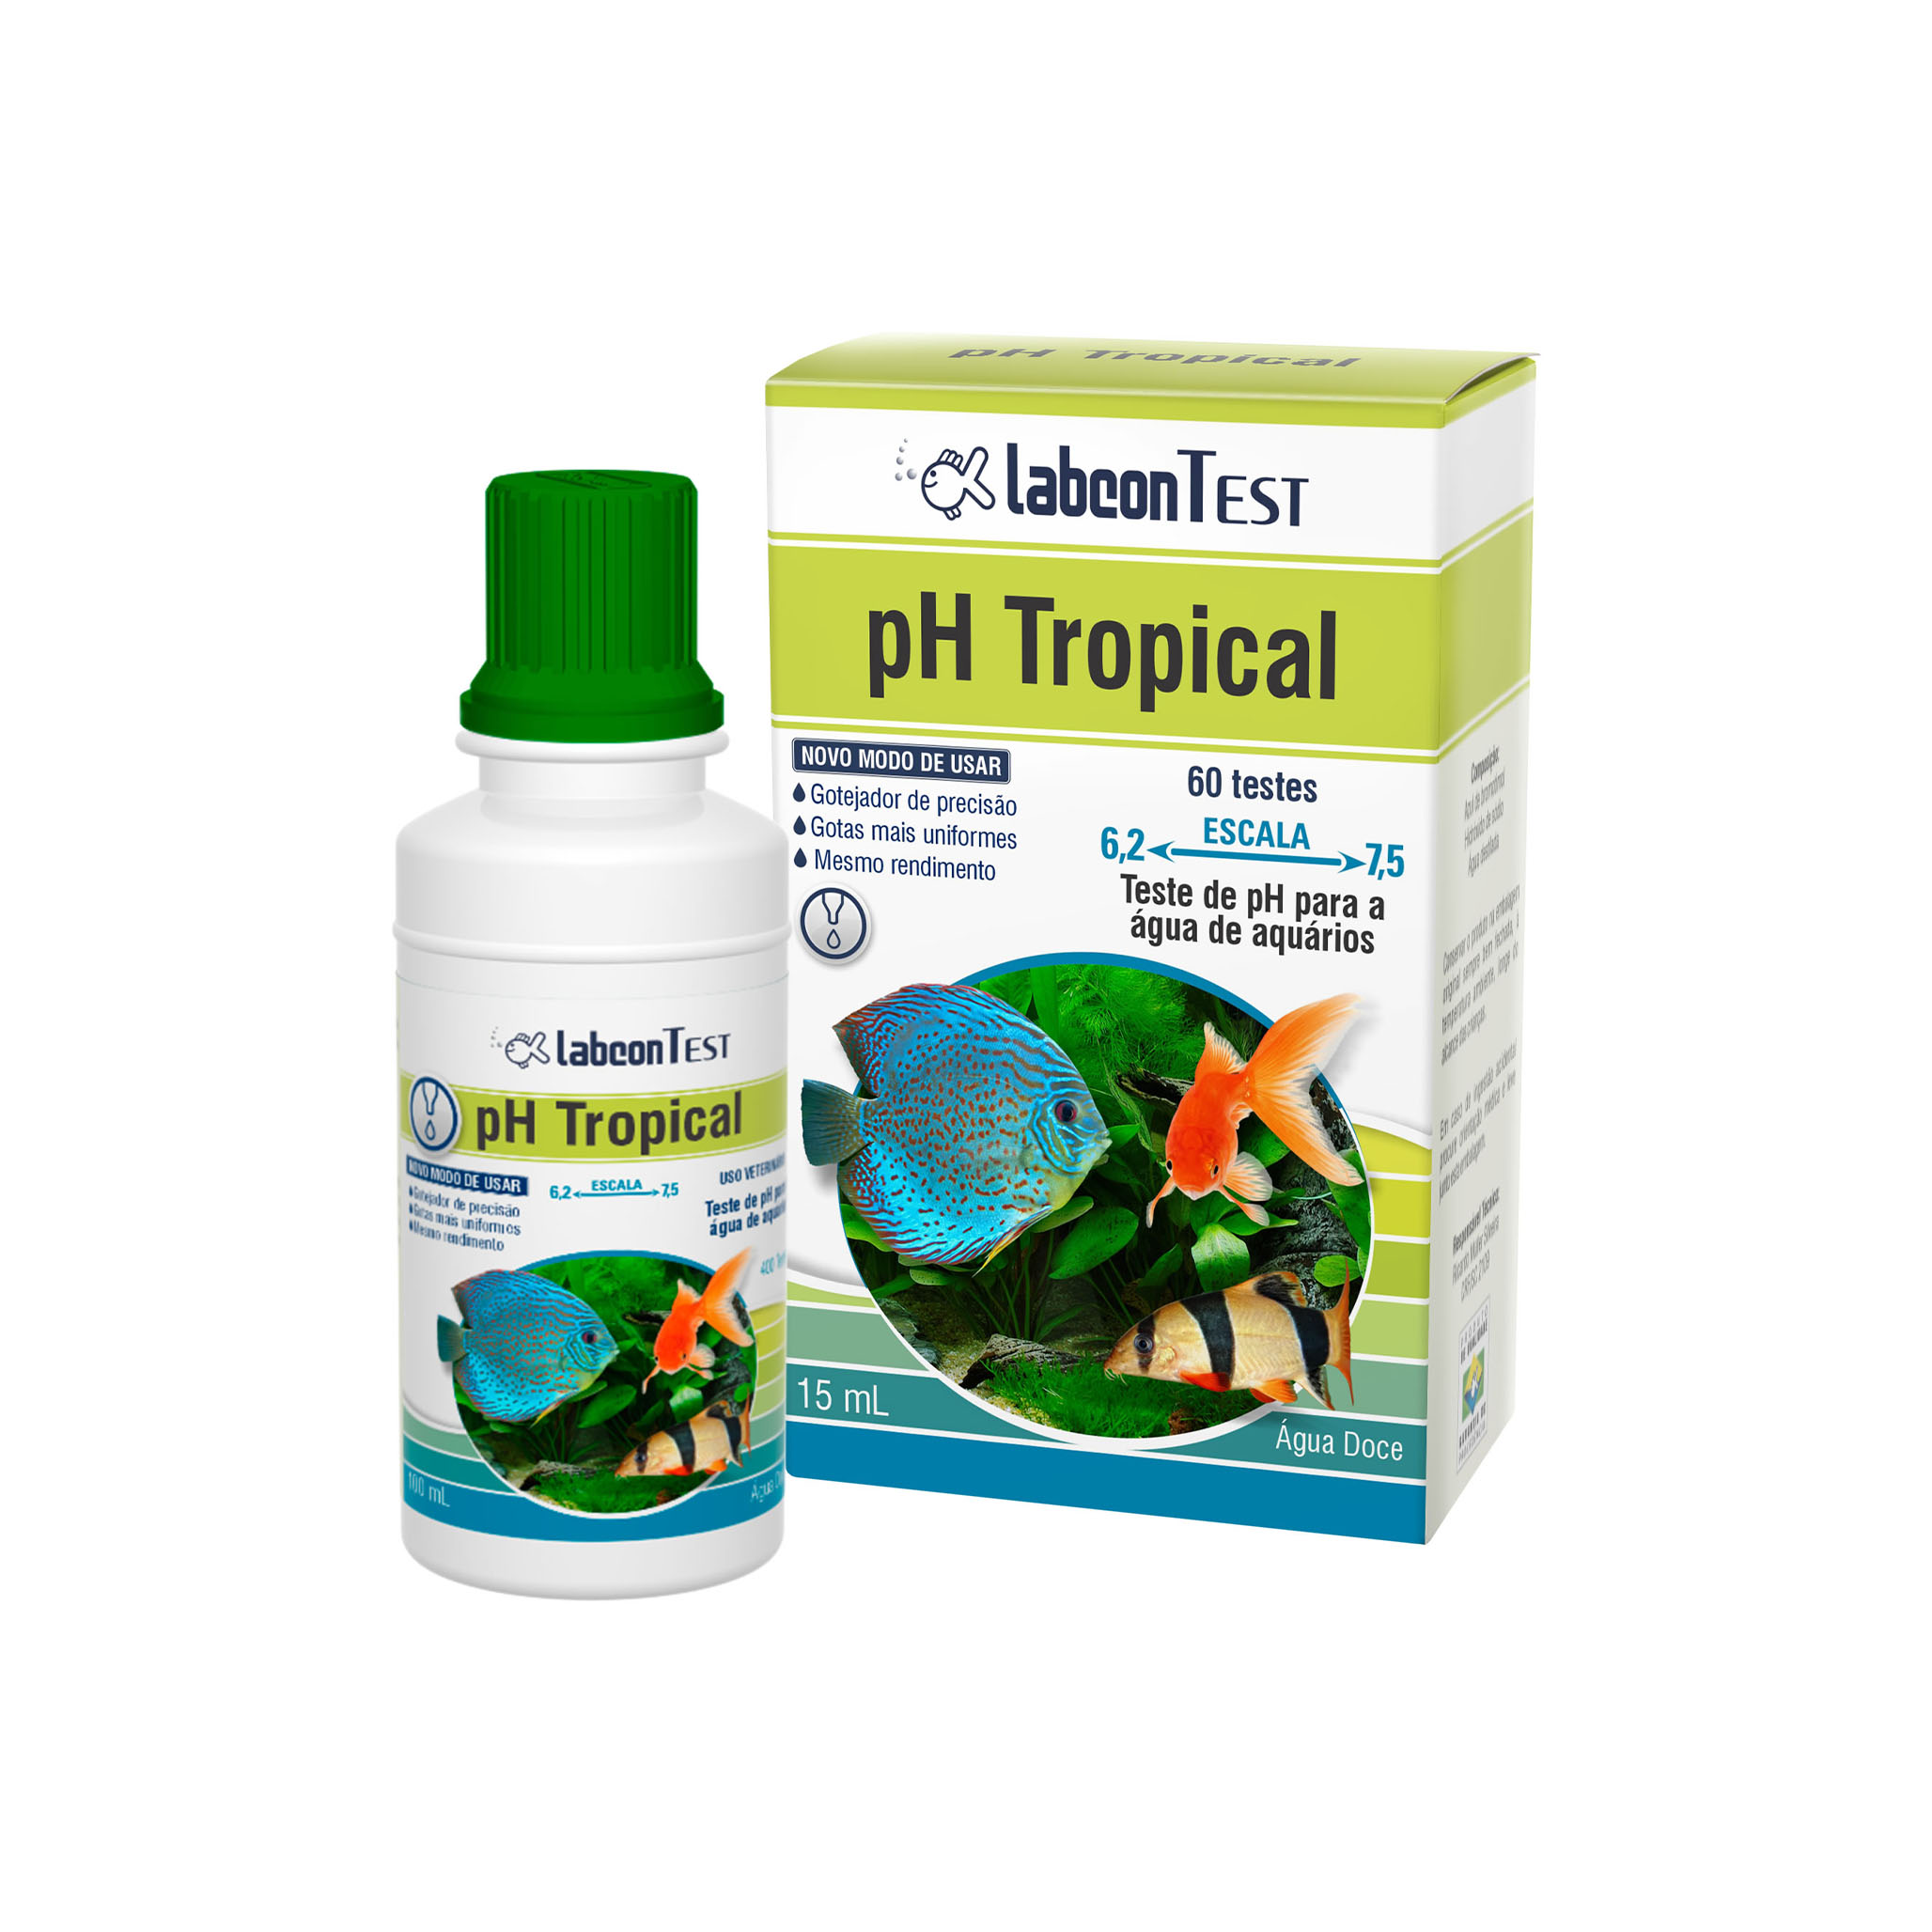 Labcon Test pH Tropical 15ml Alcon